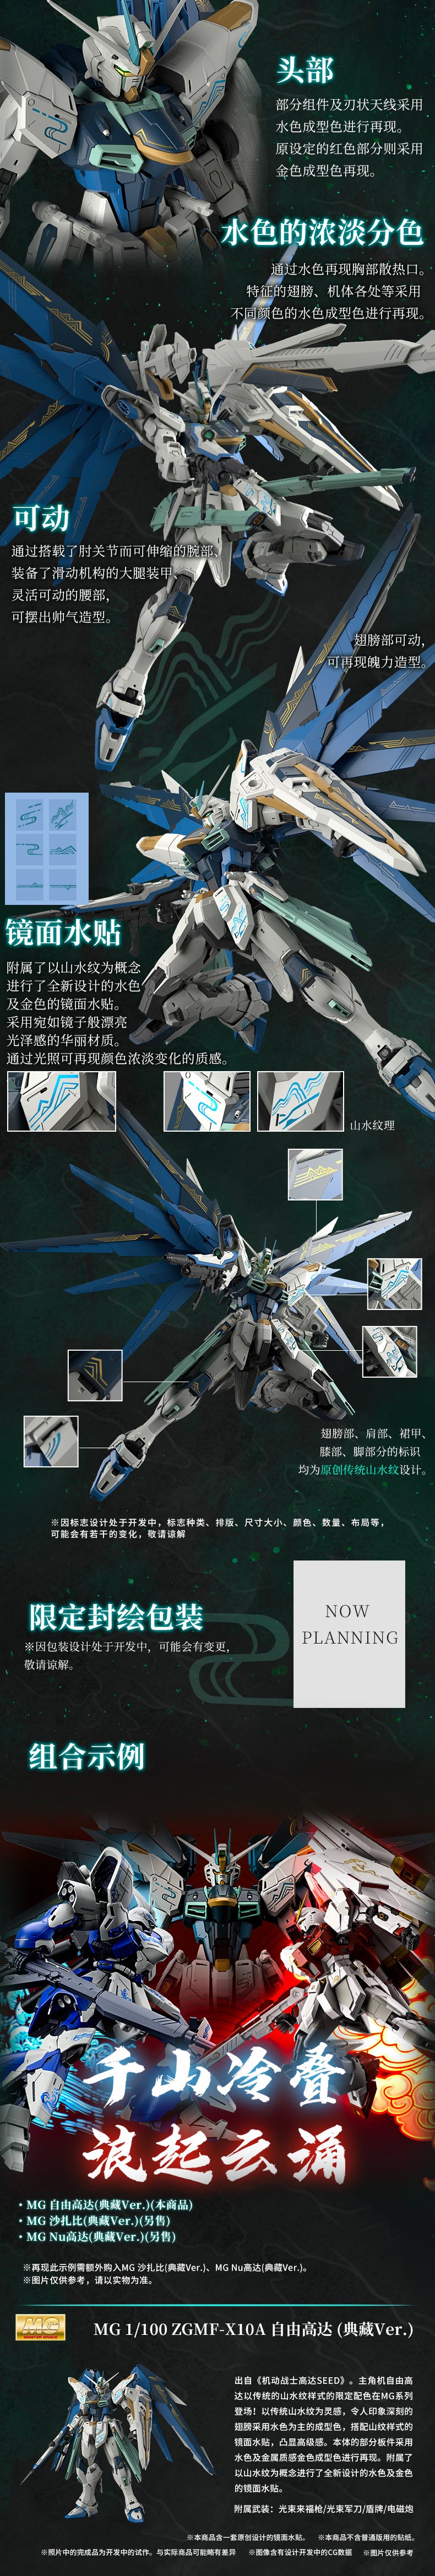 Bandai MG 1/100 ZGMF-X10A Freedom Gundam (Collector Ver.) Model Kit